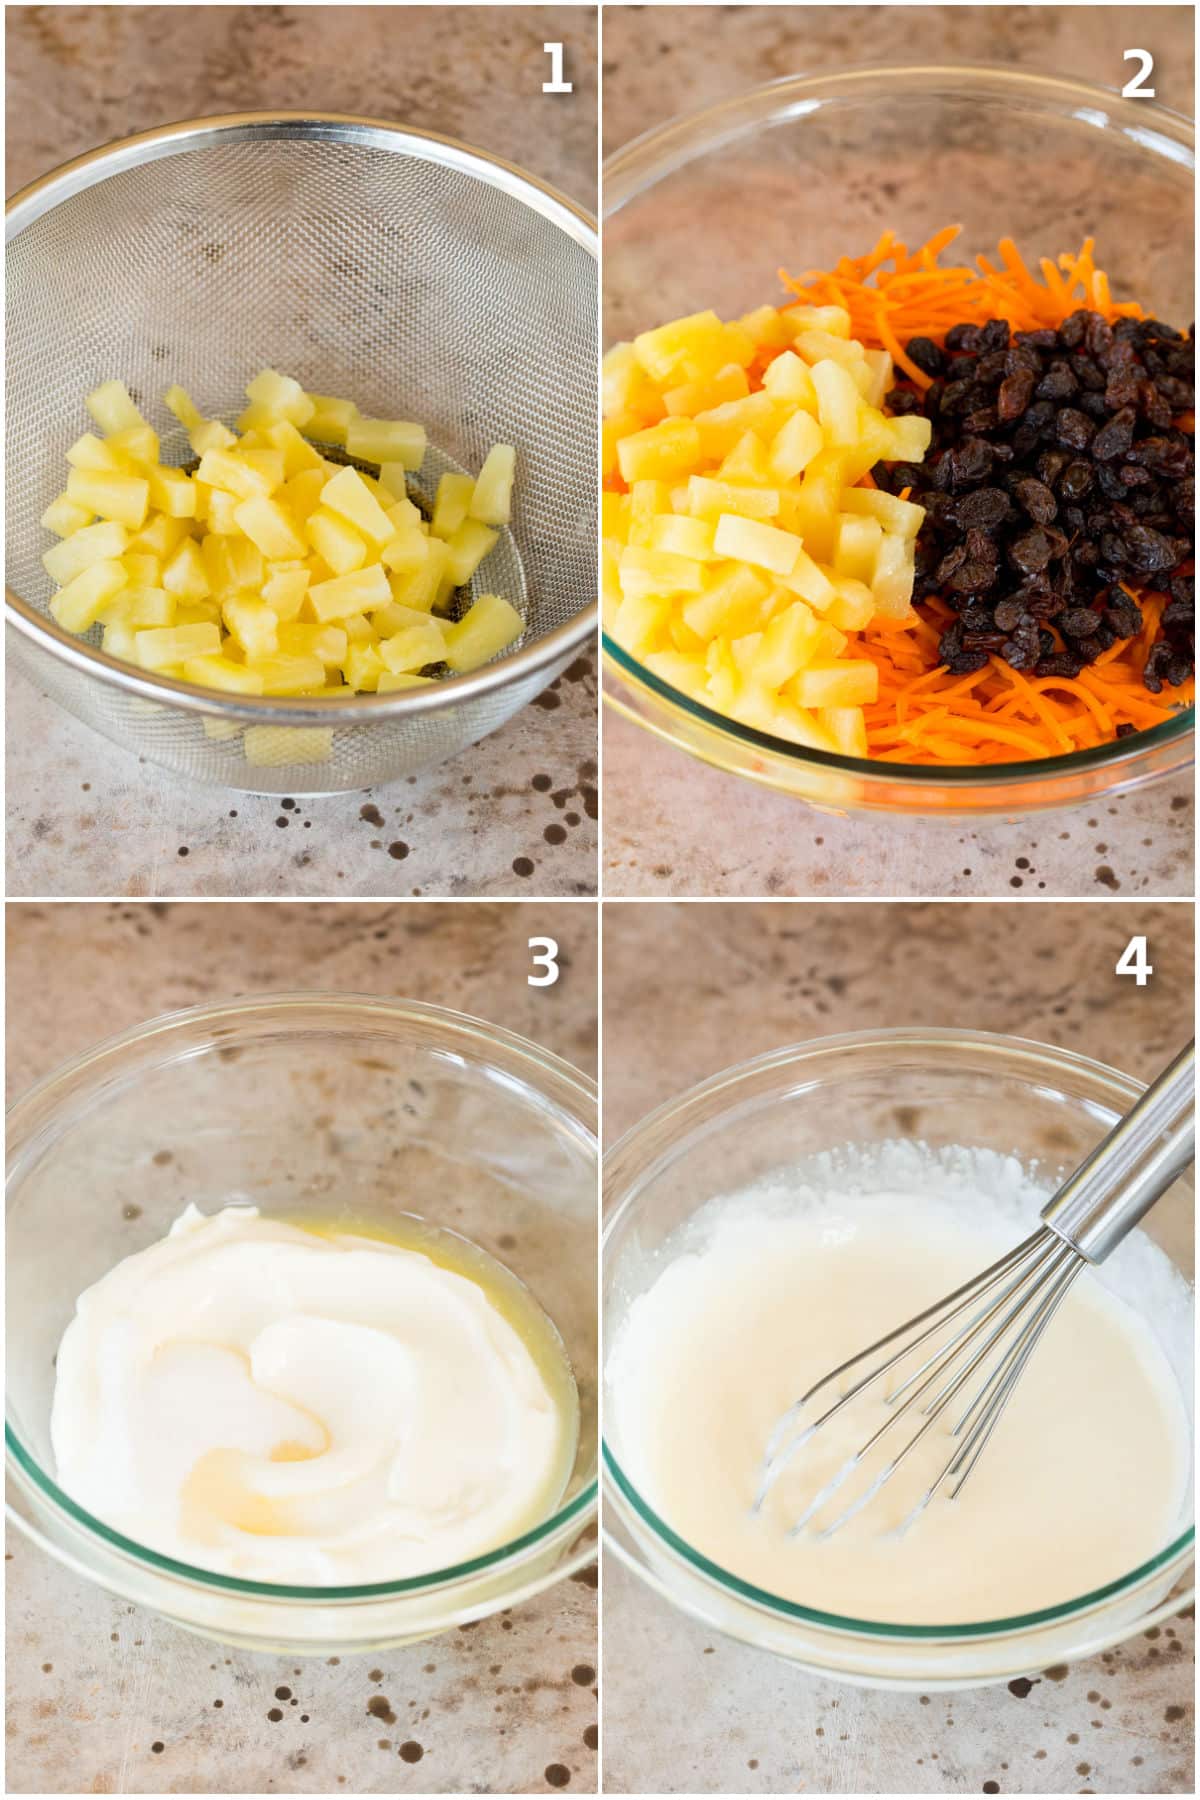 Process shots showing how to make carrot raisin salad.